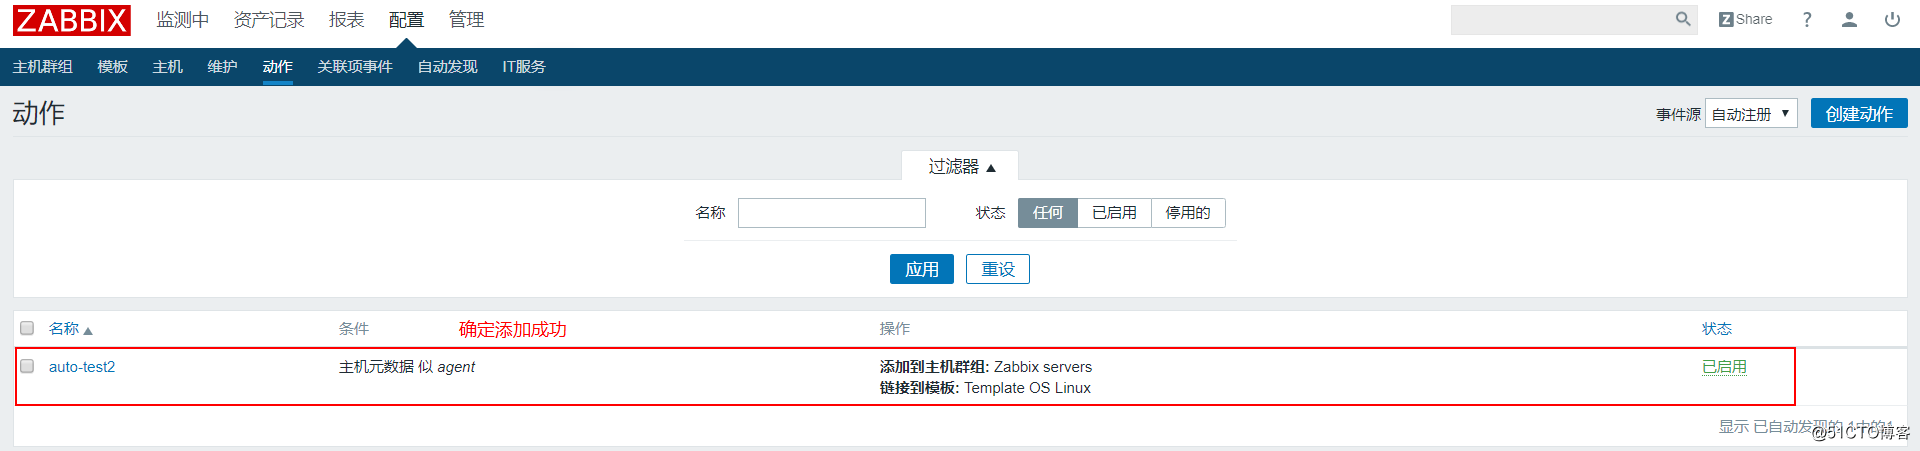 zabbix configure automatic discovery and automatic registration